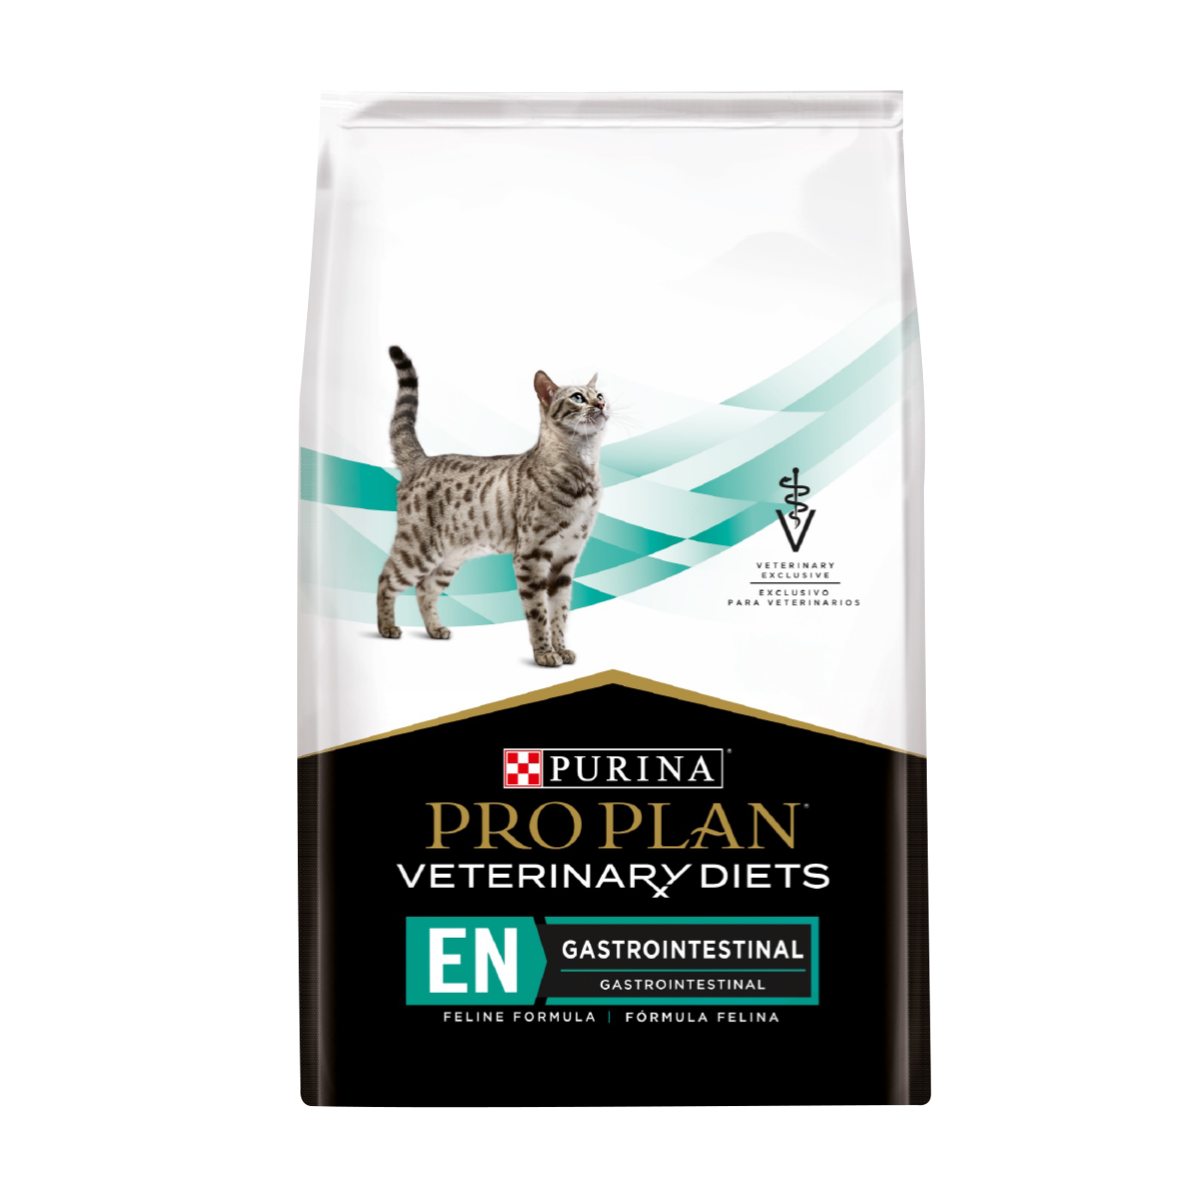 purina-pro-plan-veterinay-diets-cat-en-gastrointestinal.png